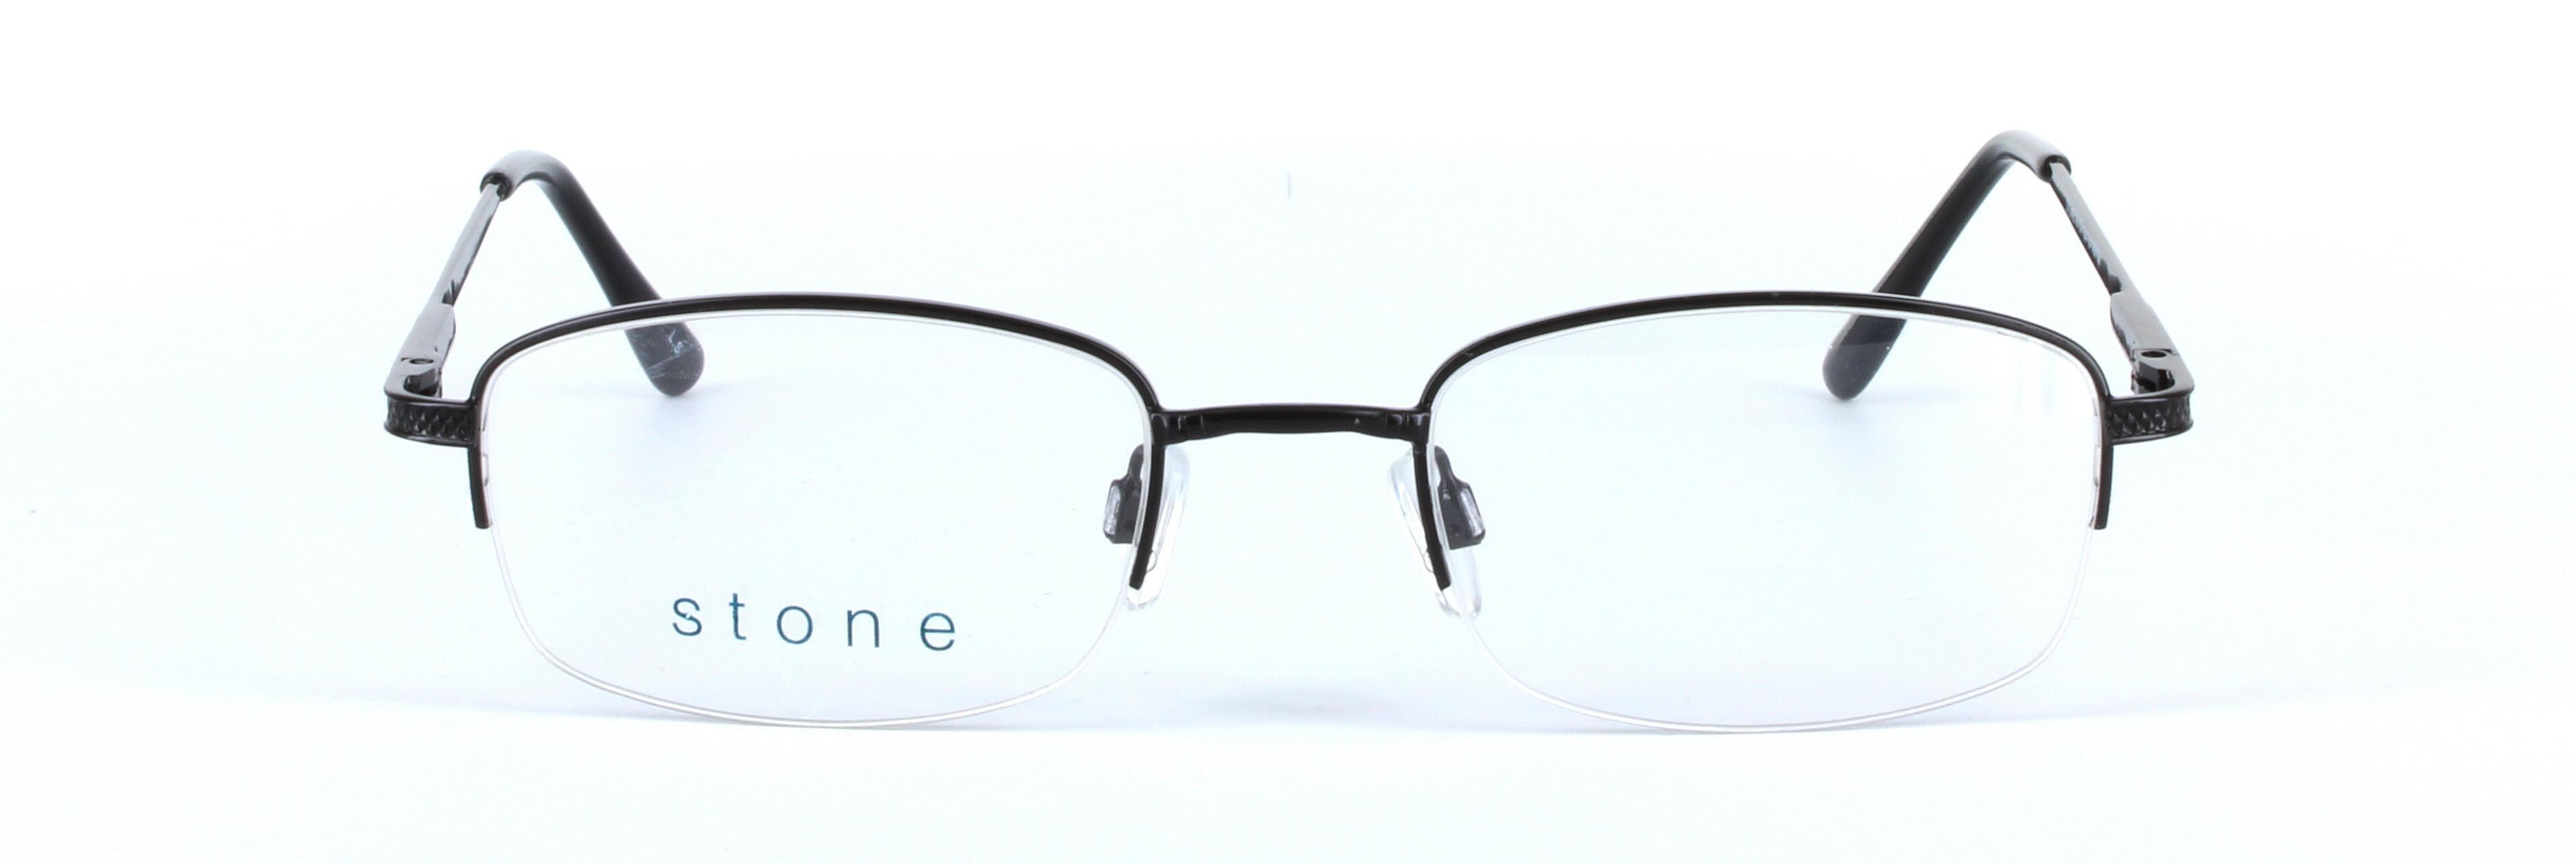 Harry Black Semi Rimless Rectangular Metal Glasses - Image View 5